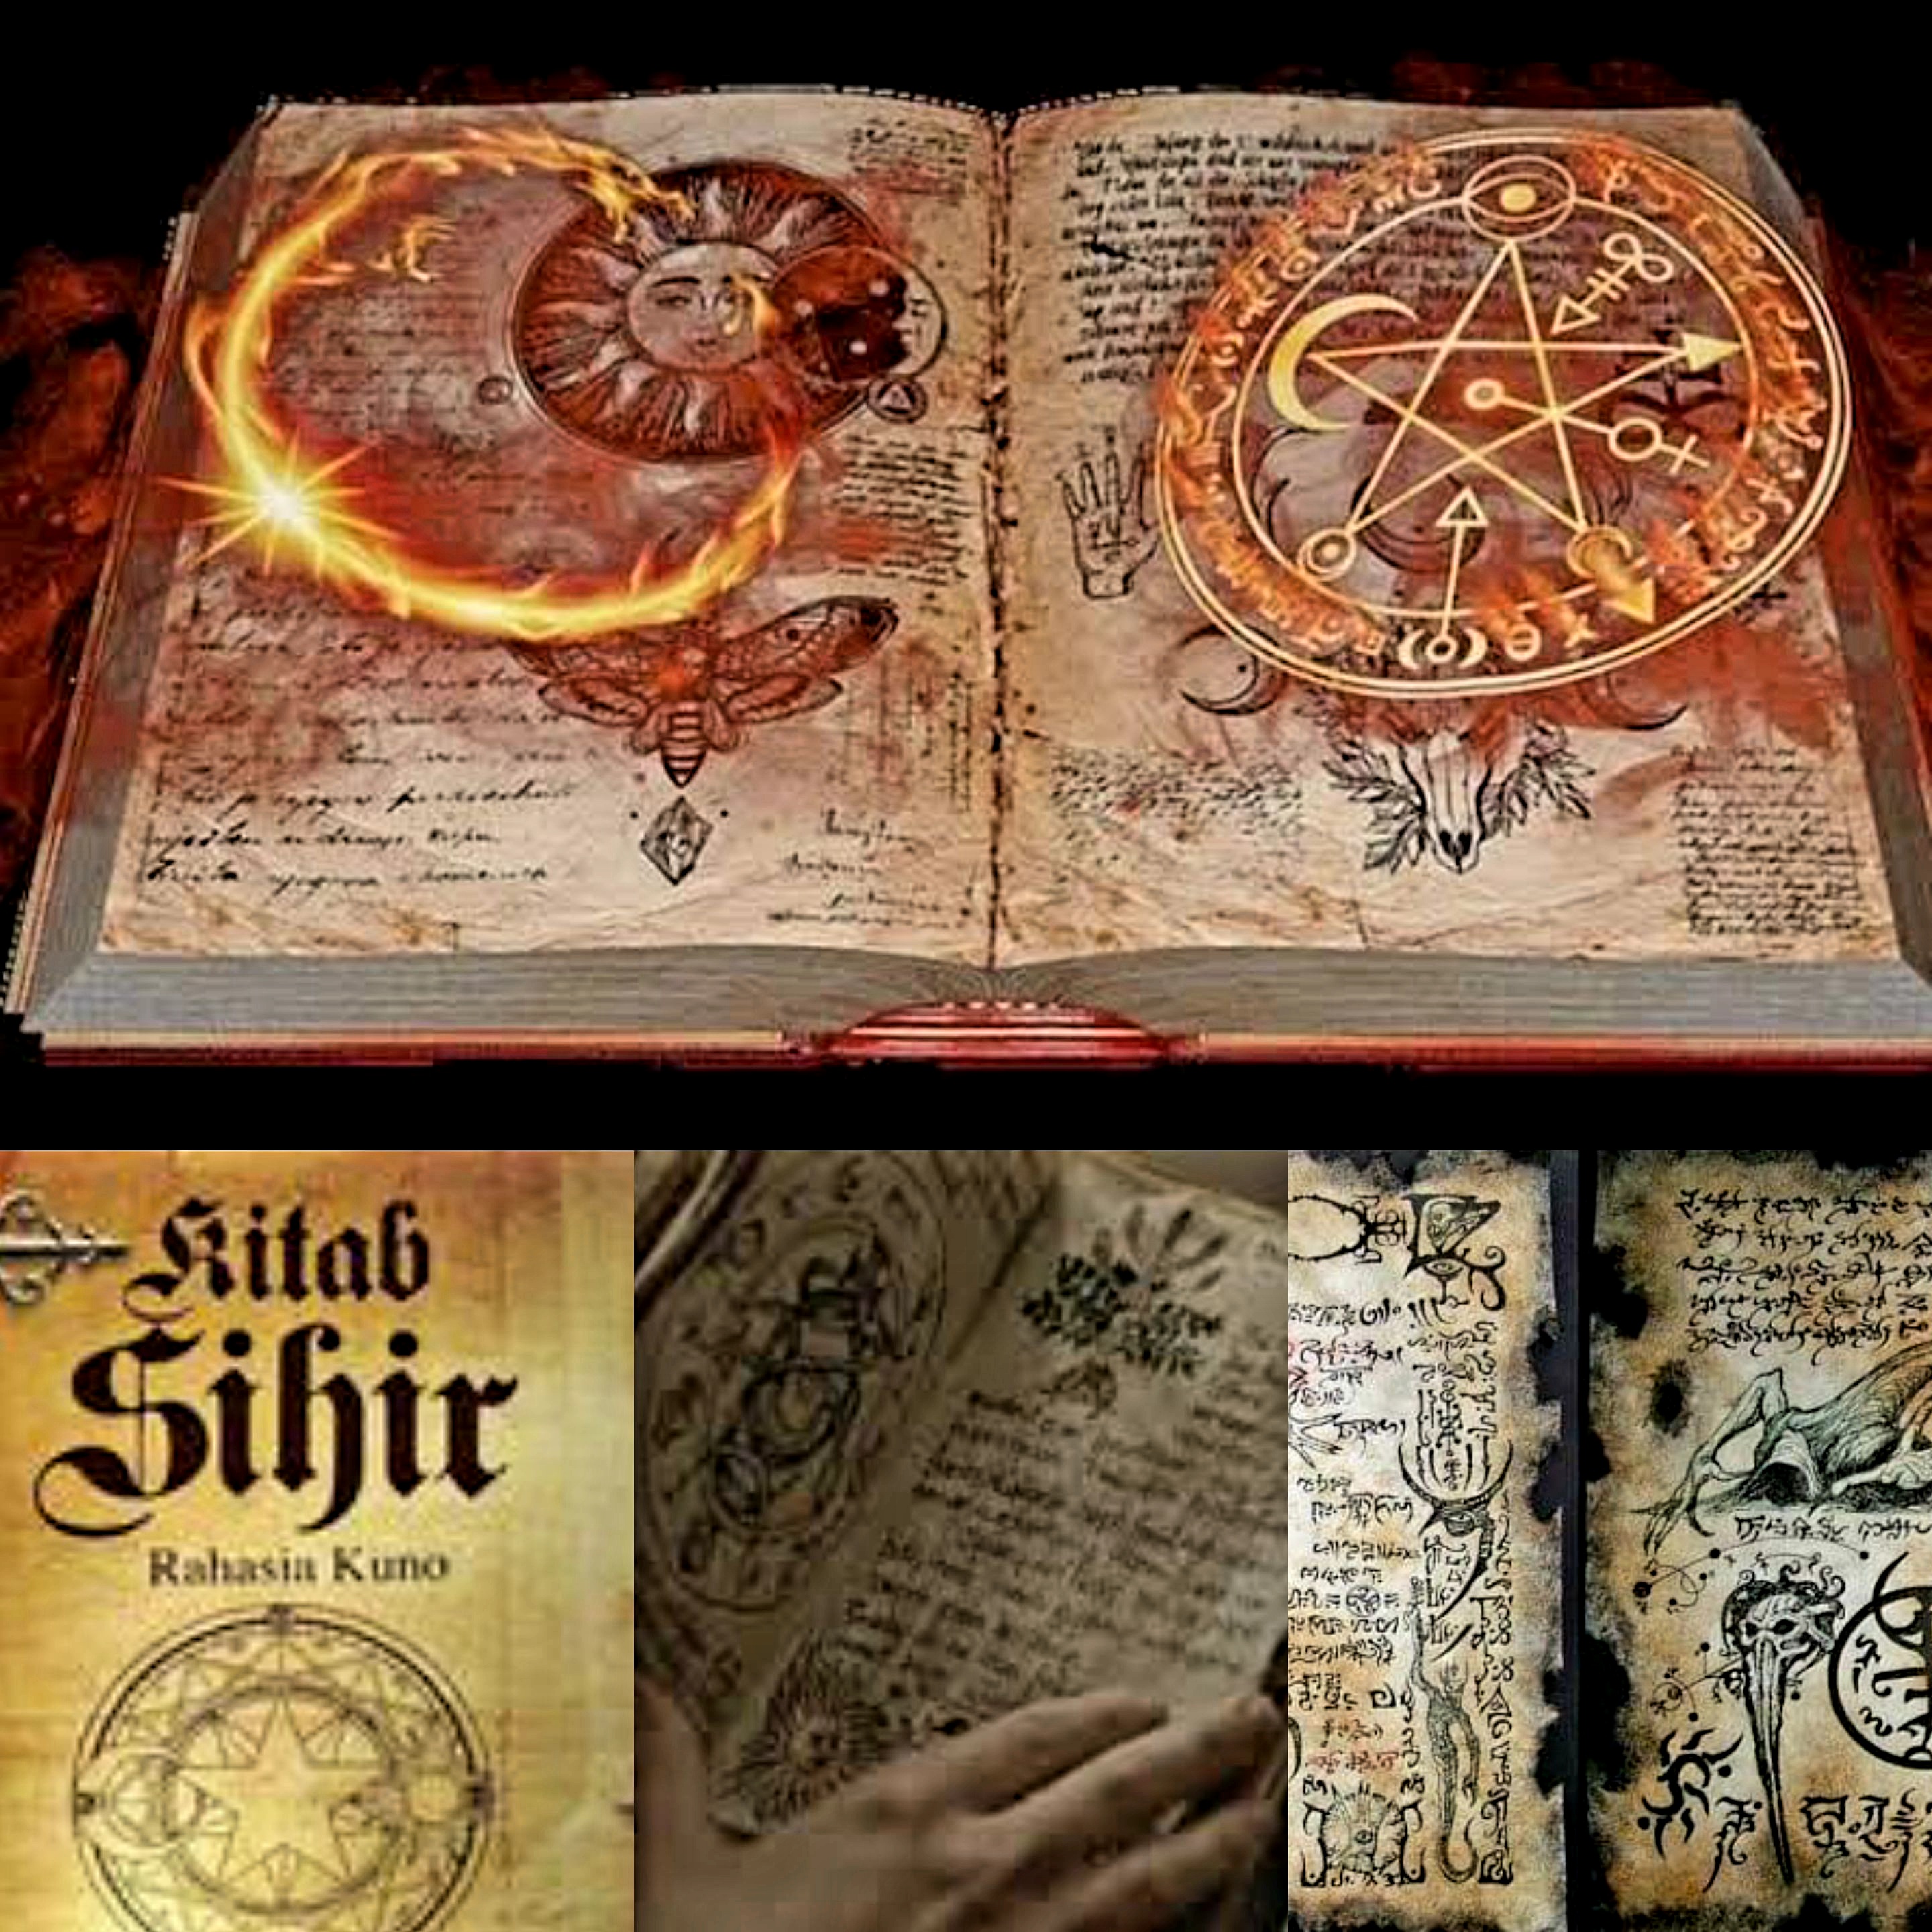 Adakadabra! Inilah 4 Kitab Sihir Paling Tua Dalam Sejarah Dunia yang Pernah Ditemukan